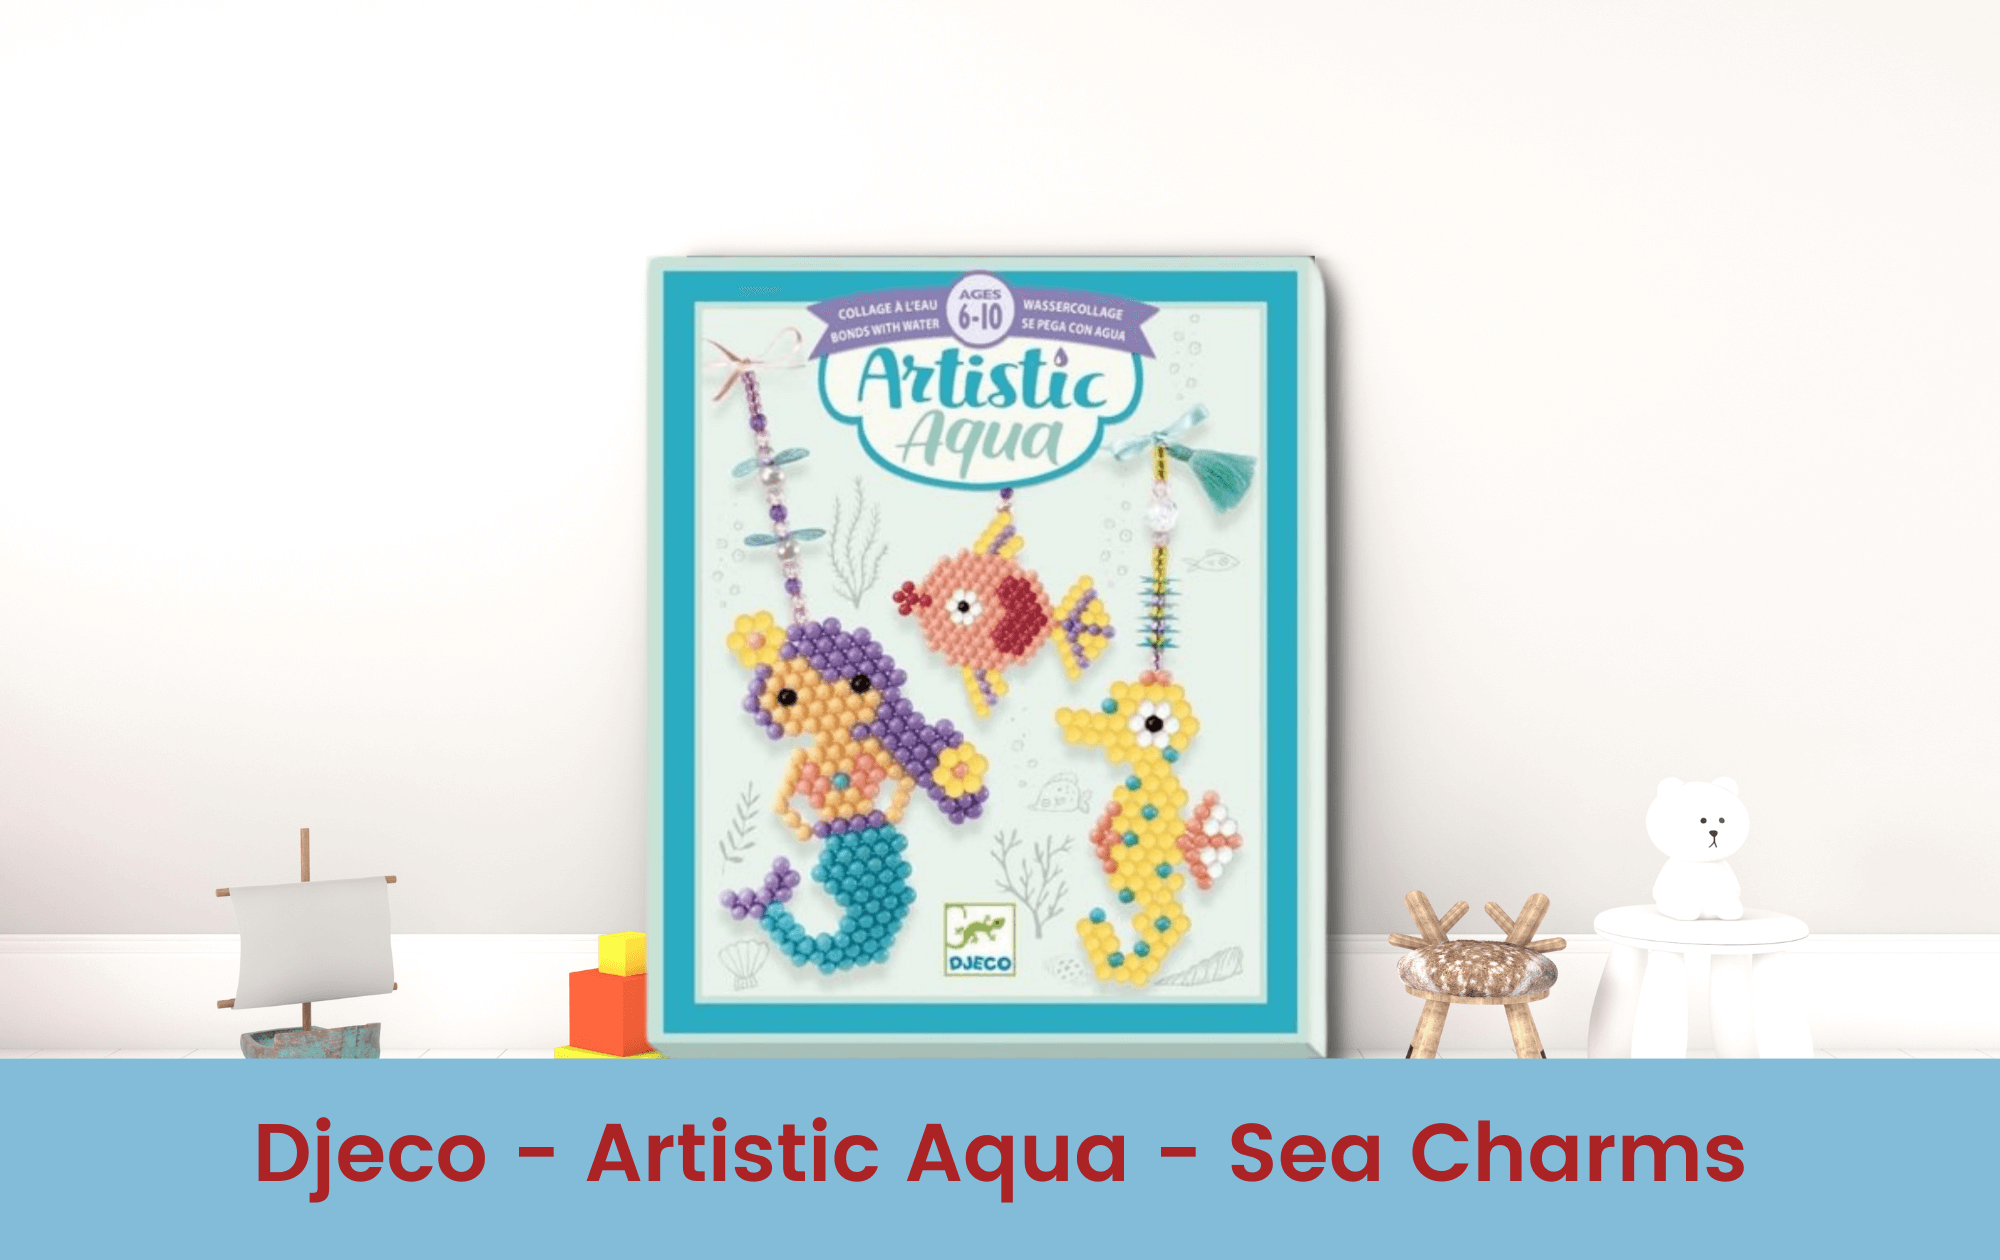 Djeco - Artistic Aqua - Sea Charms